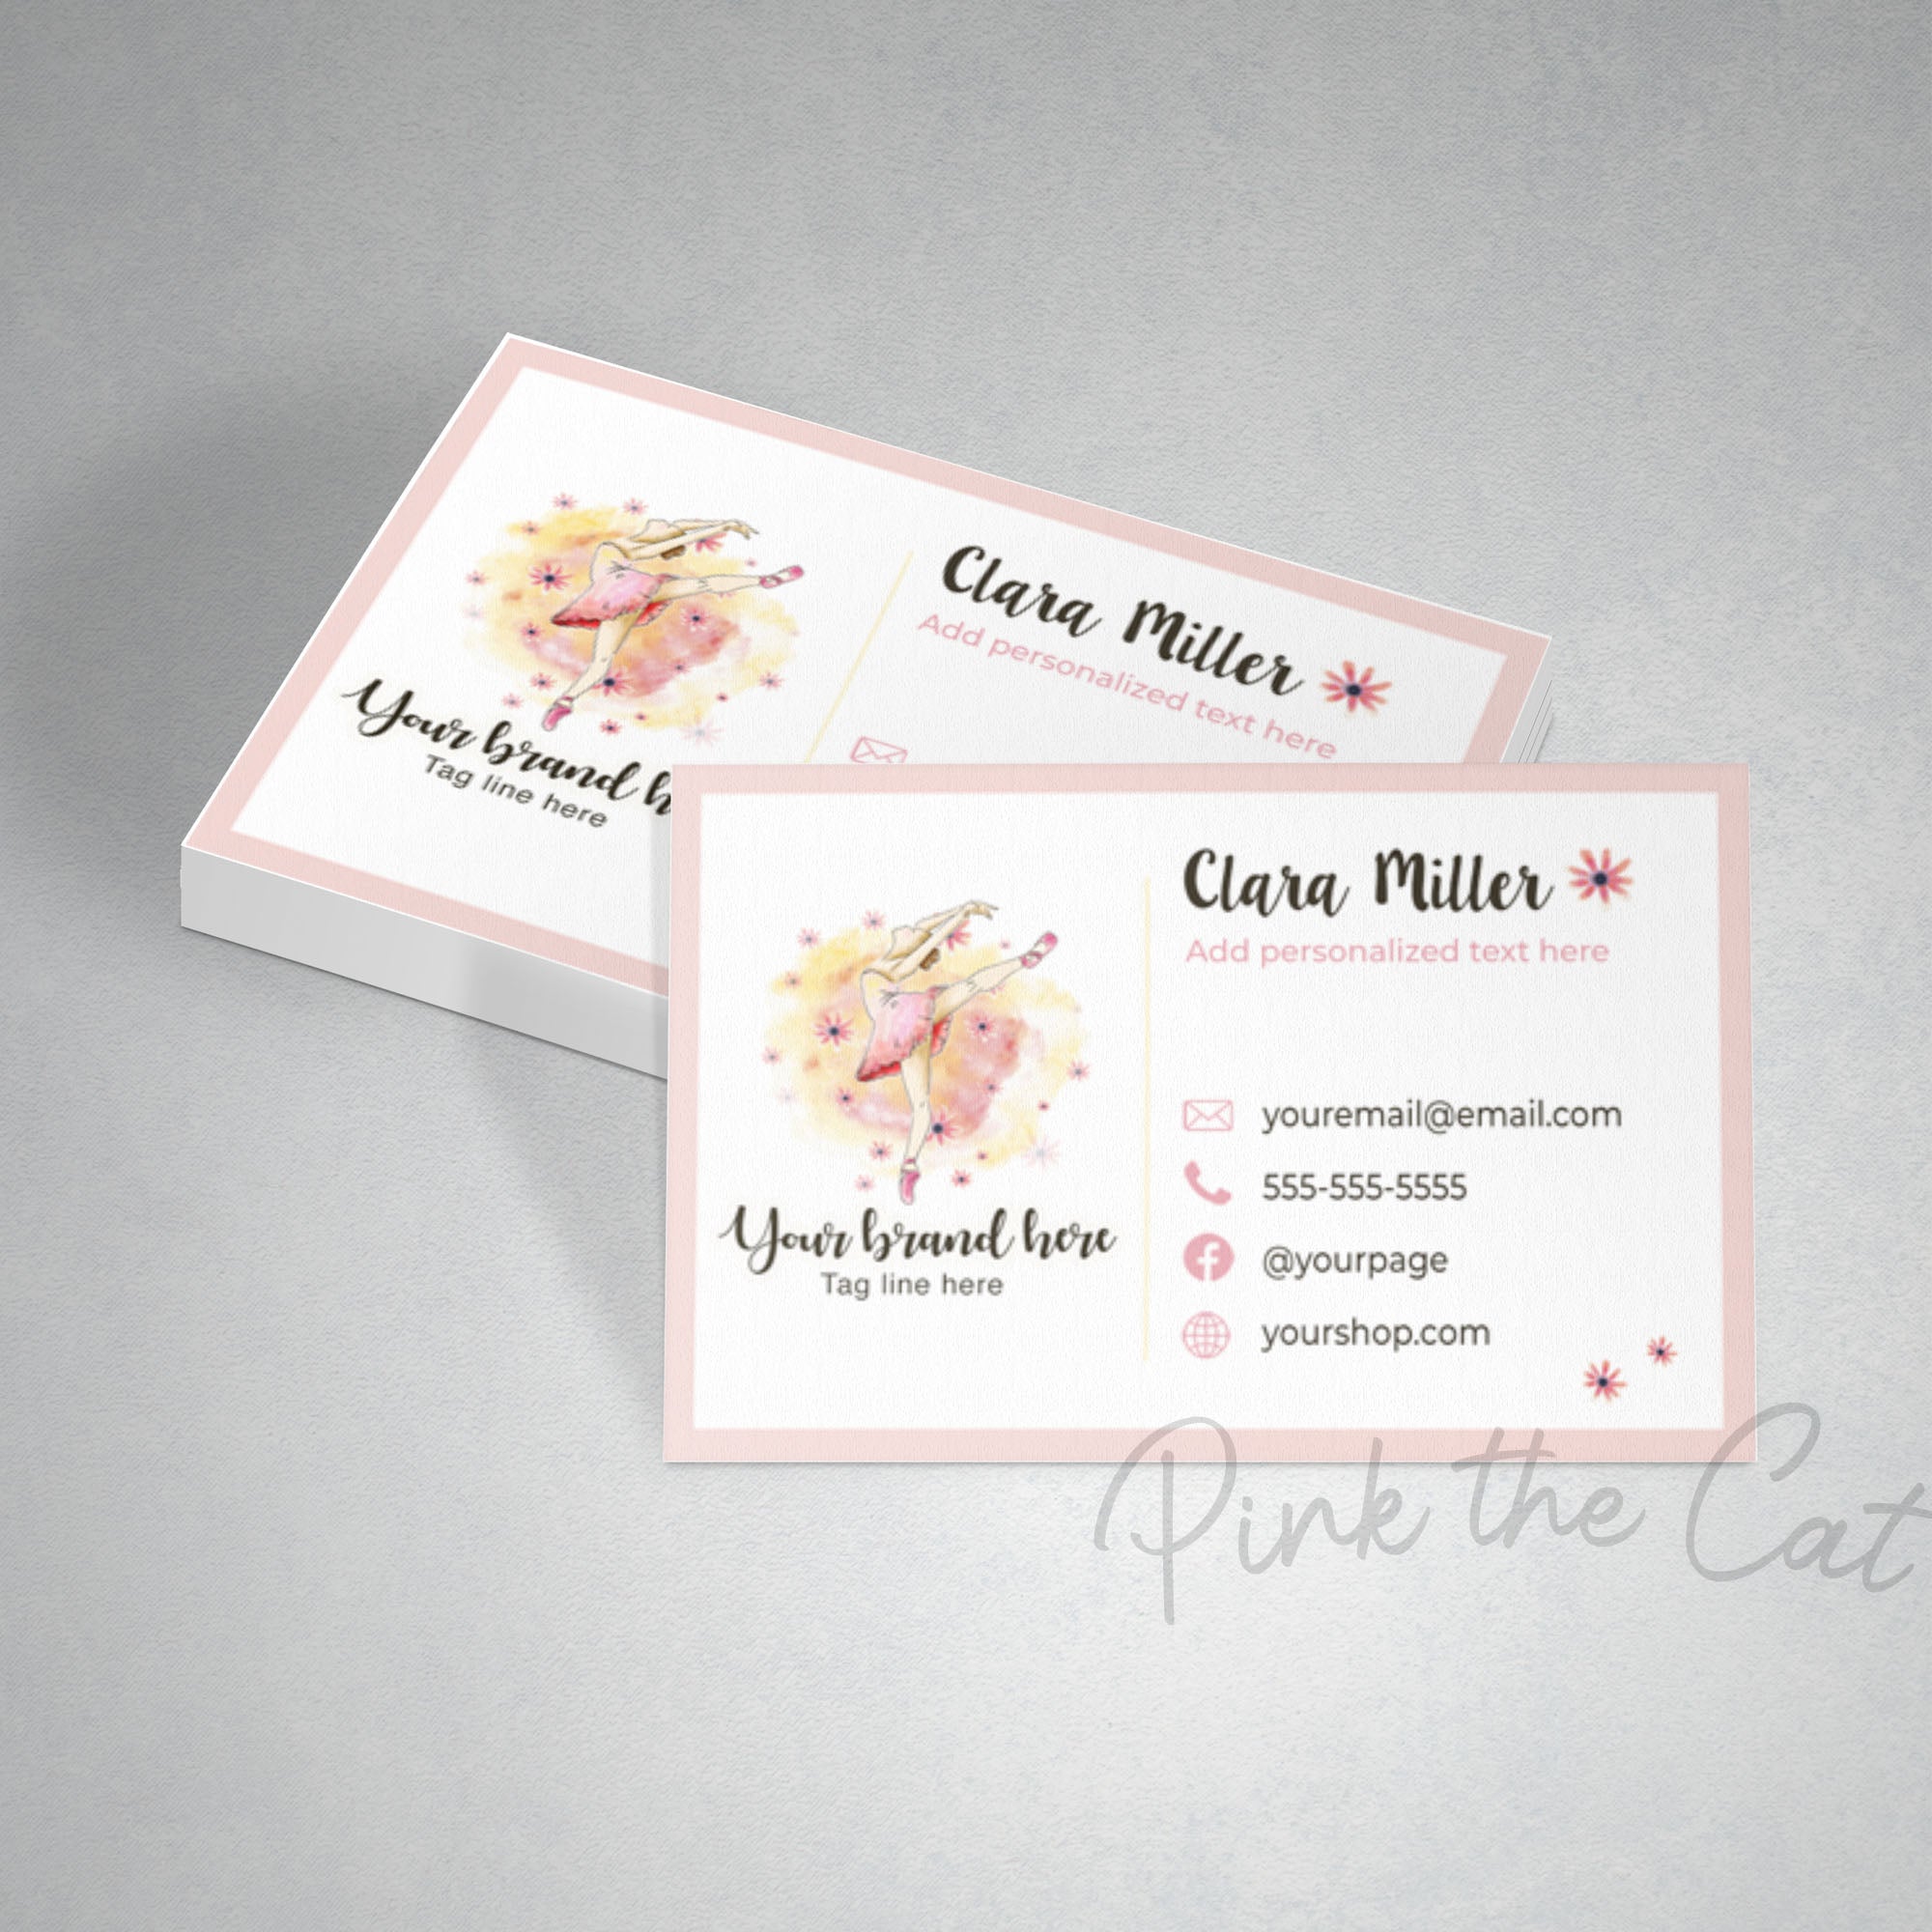 Ballerina dancer business card pink watercolor